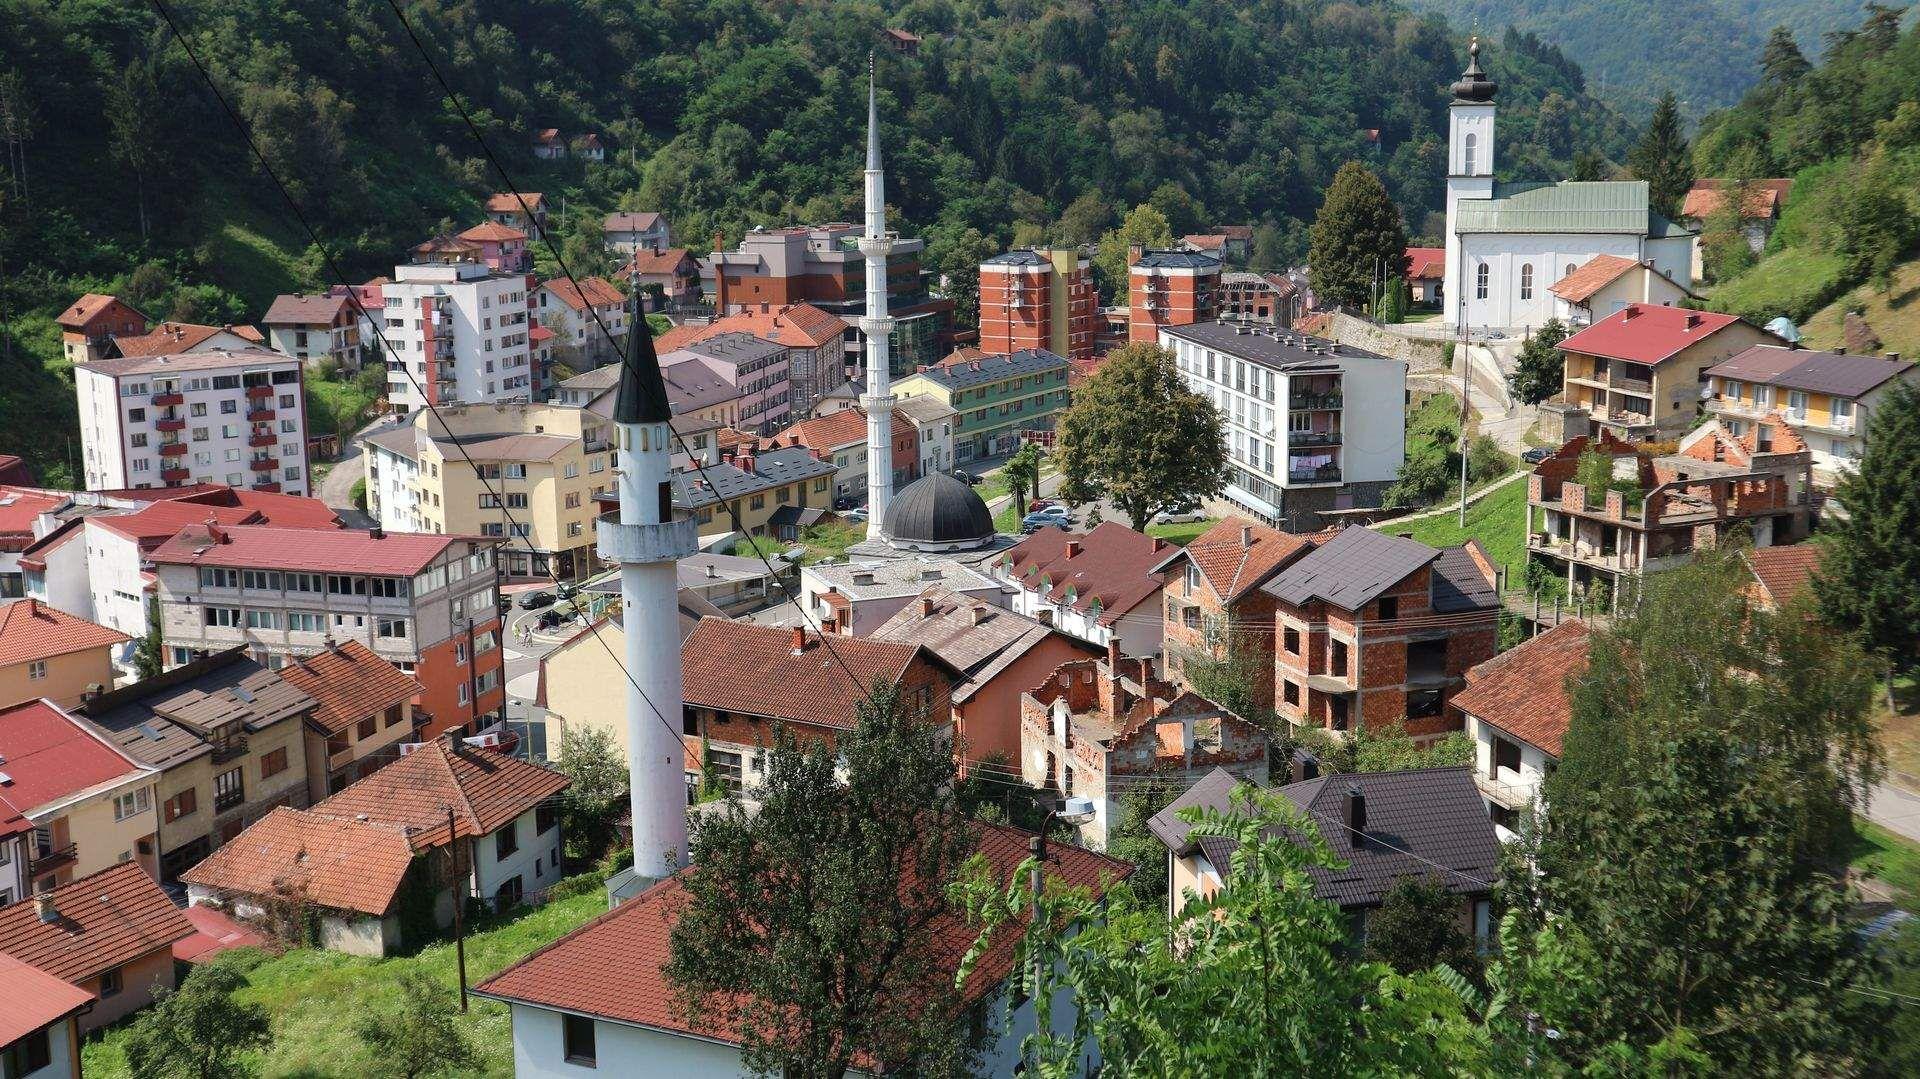 Optužbe na račun Bošnjaka u Srebrenici - Avaz